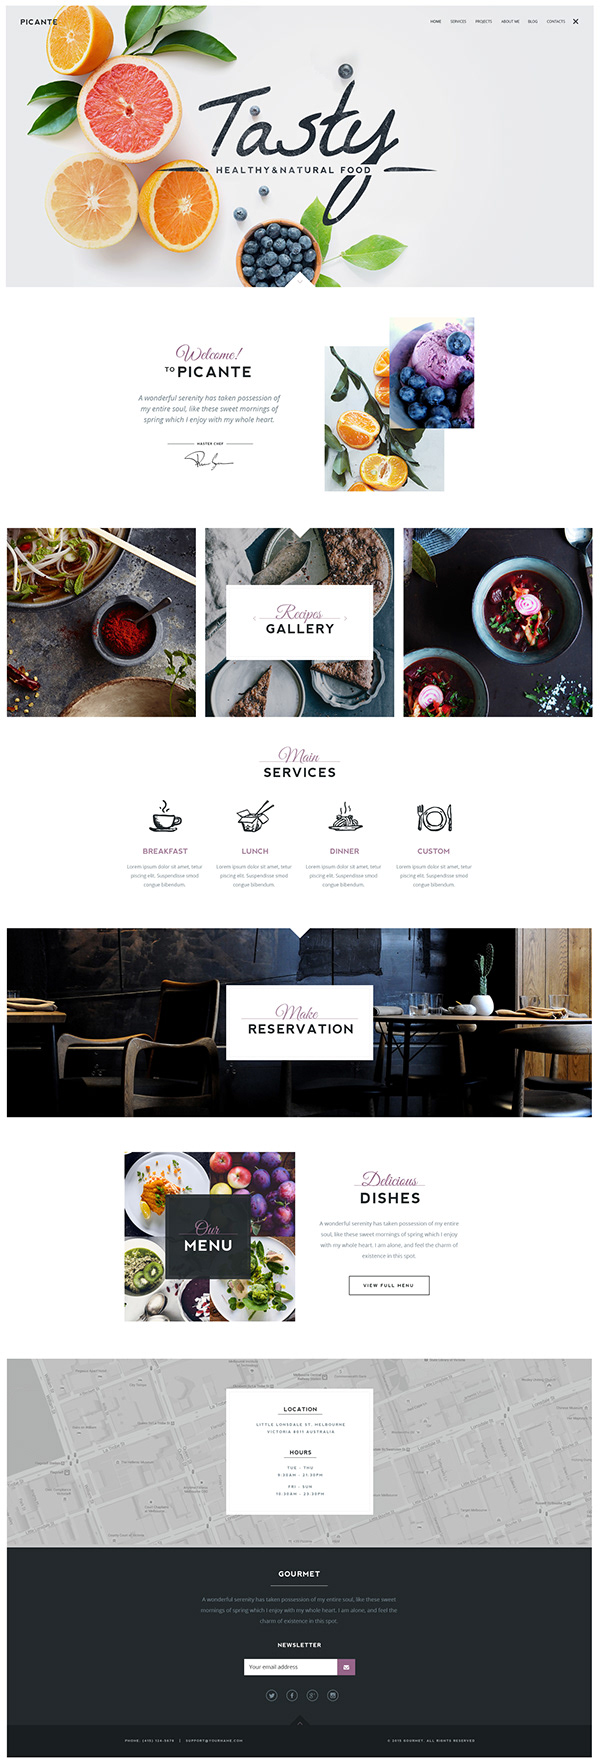 Picante - Restaurant & Food WordPress Theme